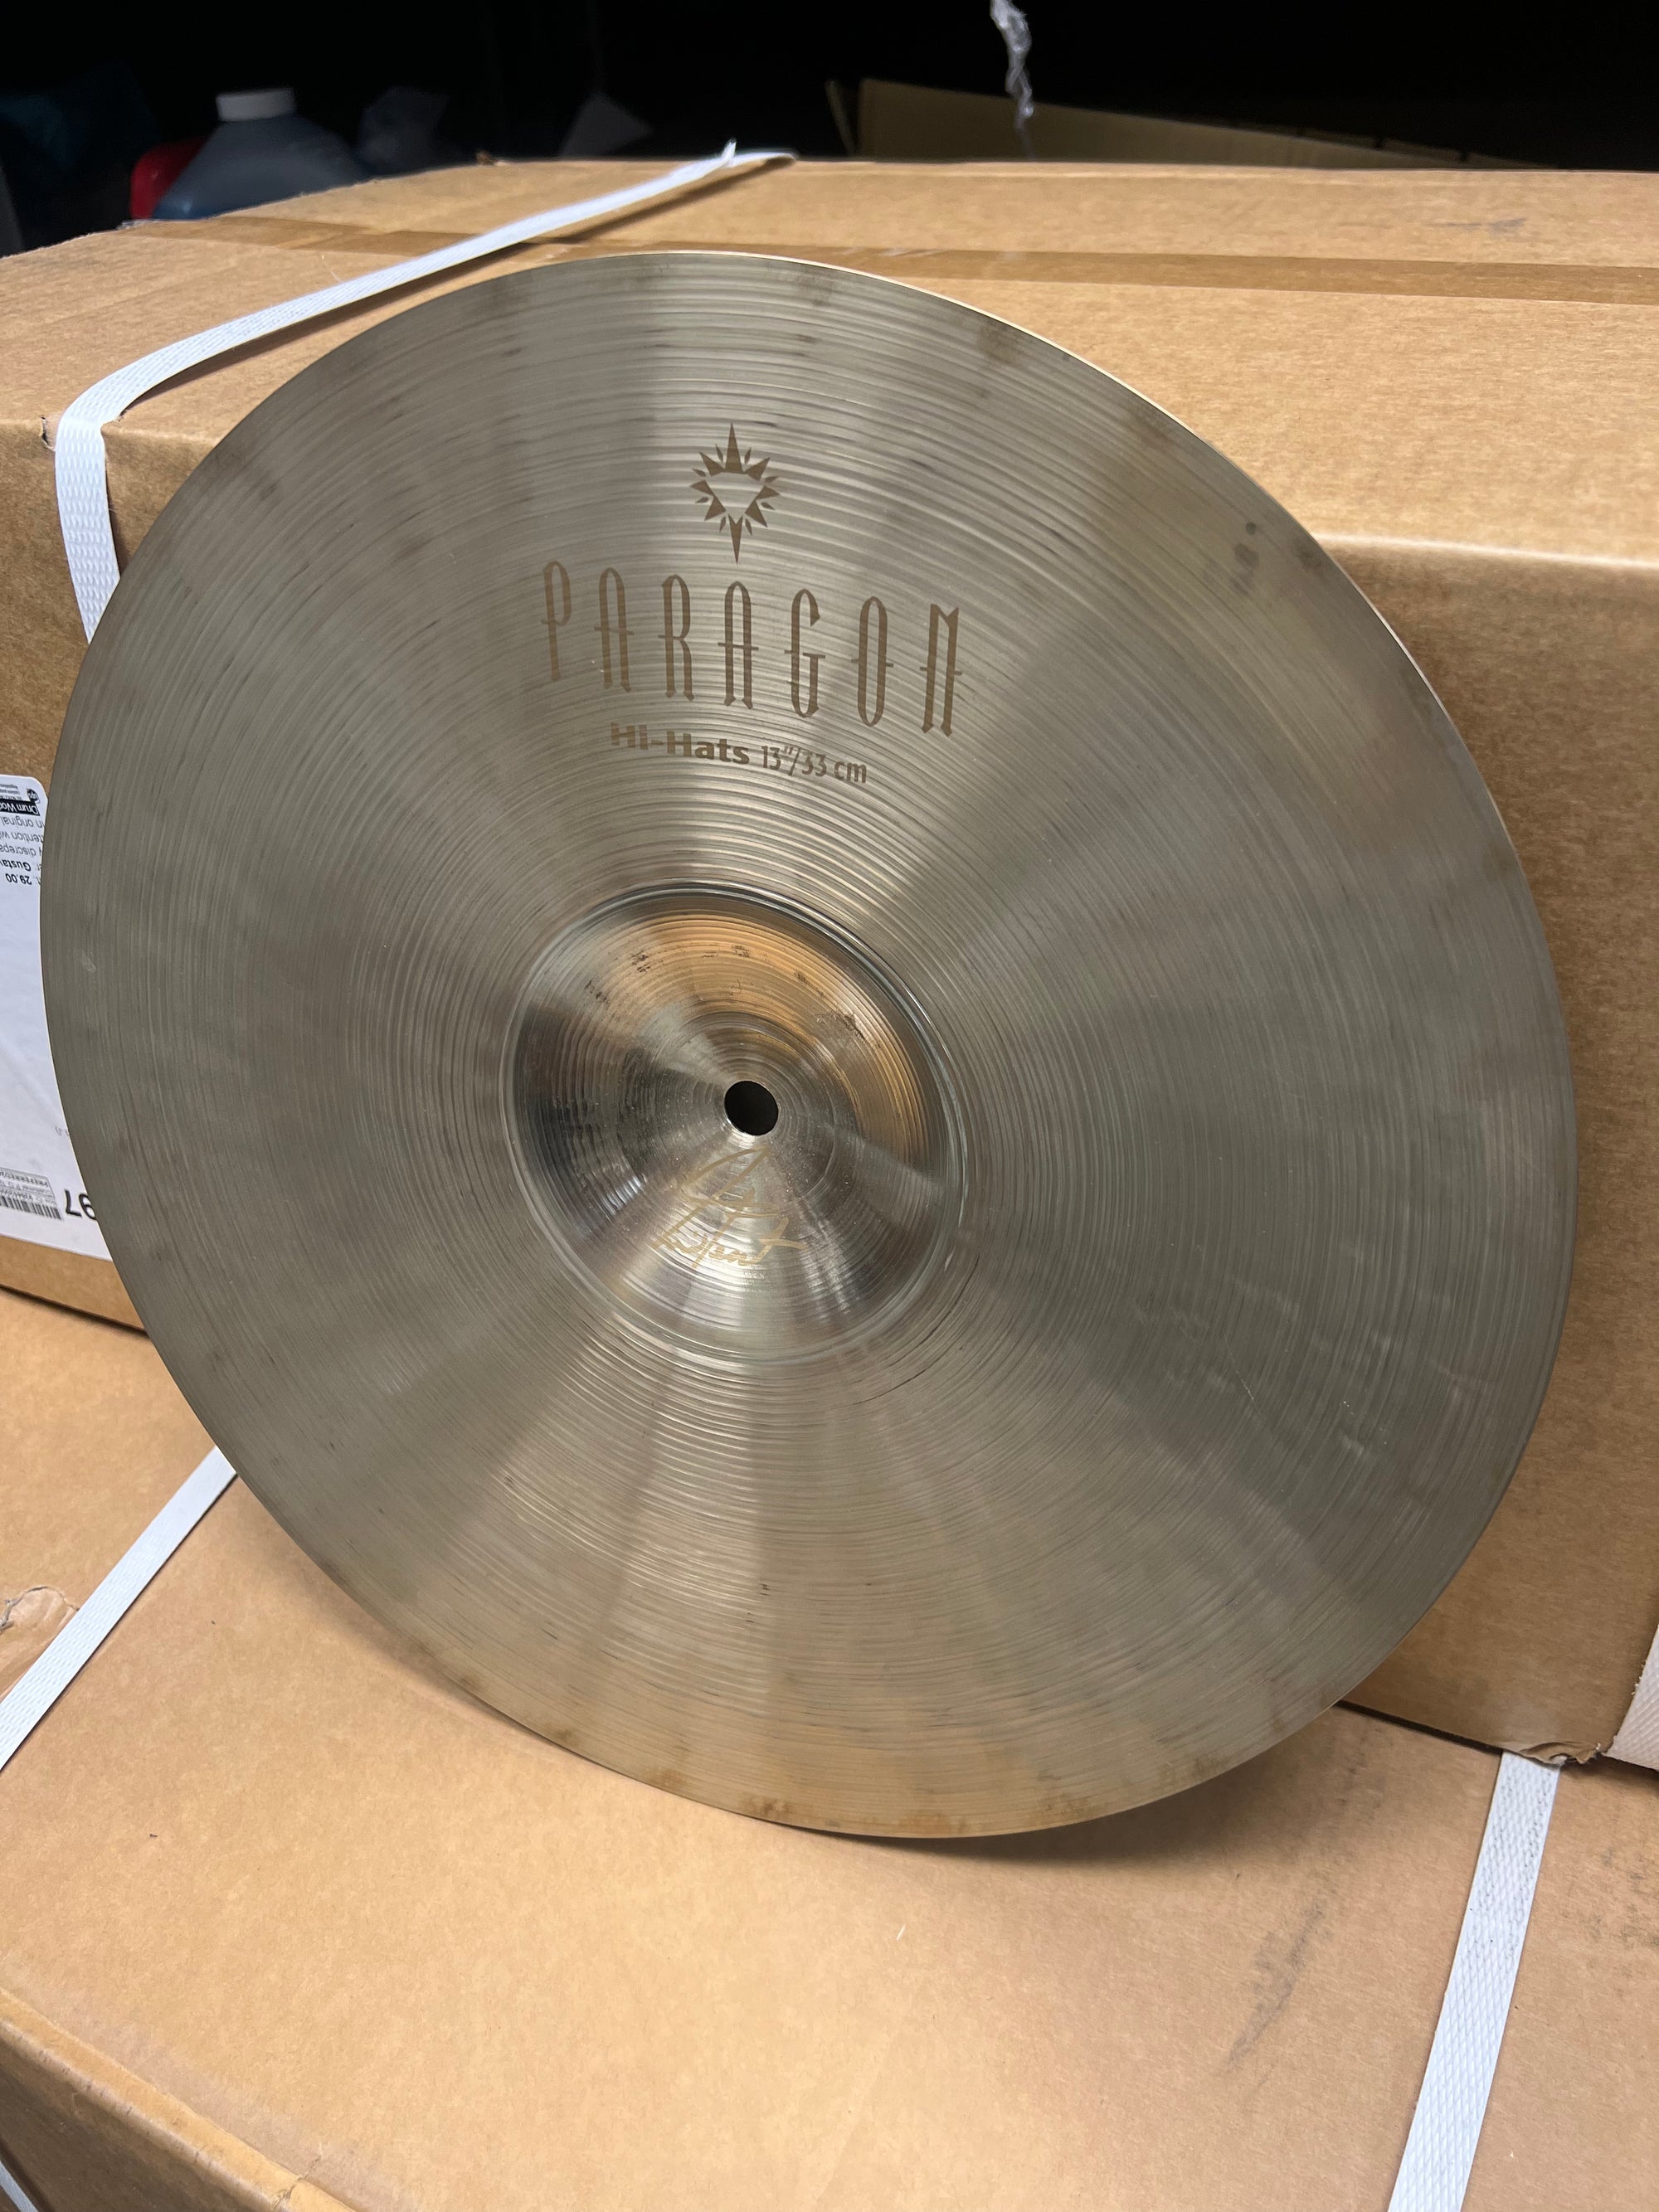 Sabian 13” Paragon Hi hat bottom Cymbal